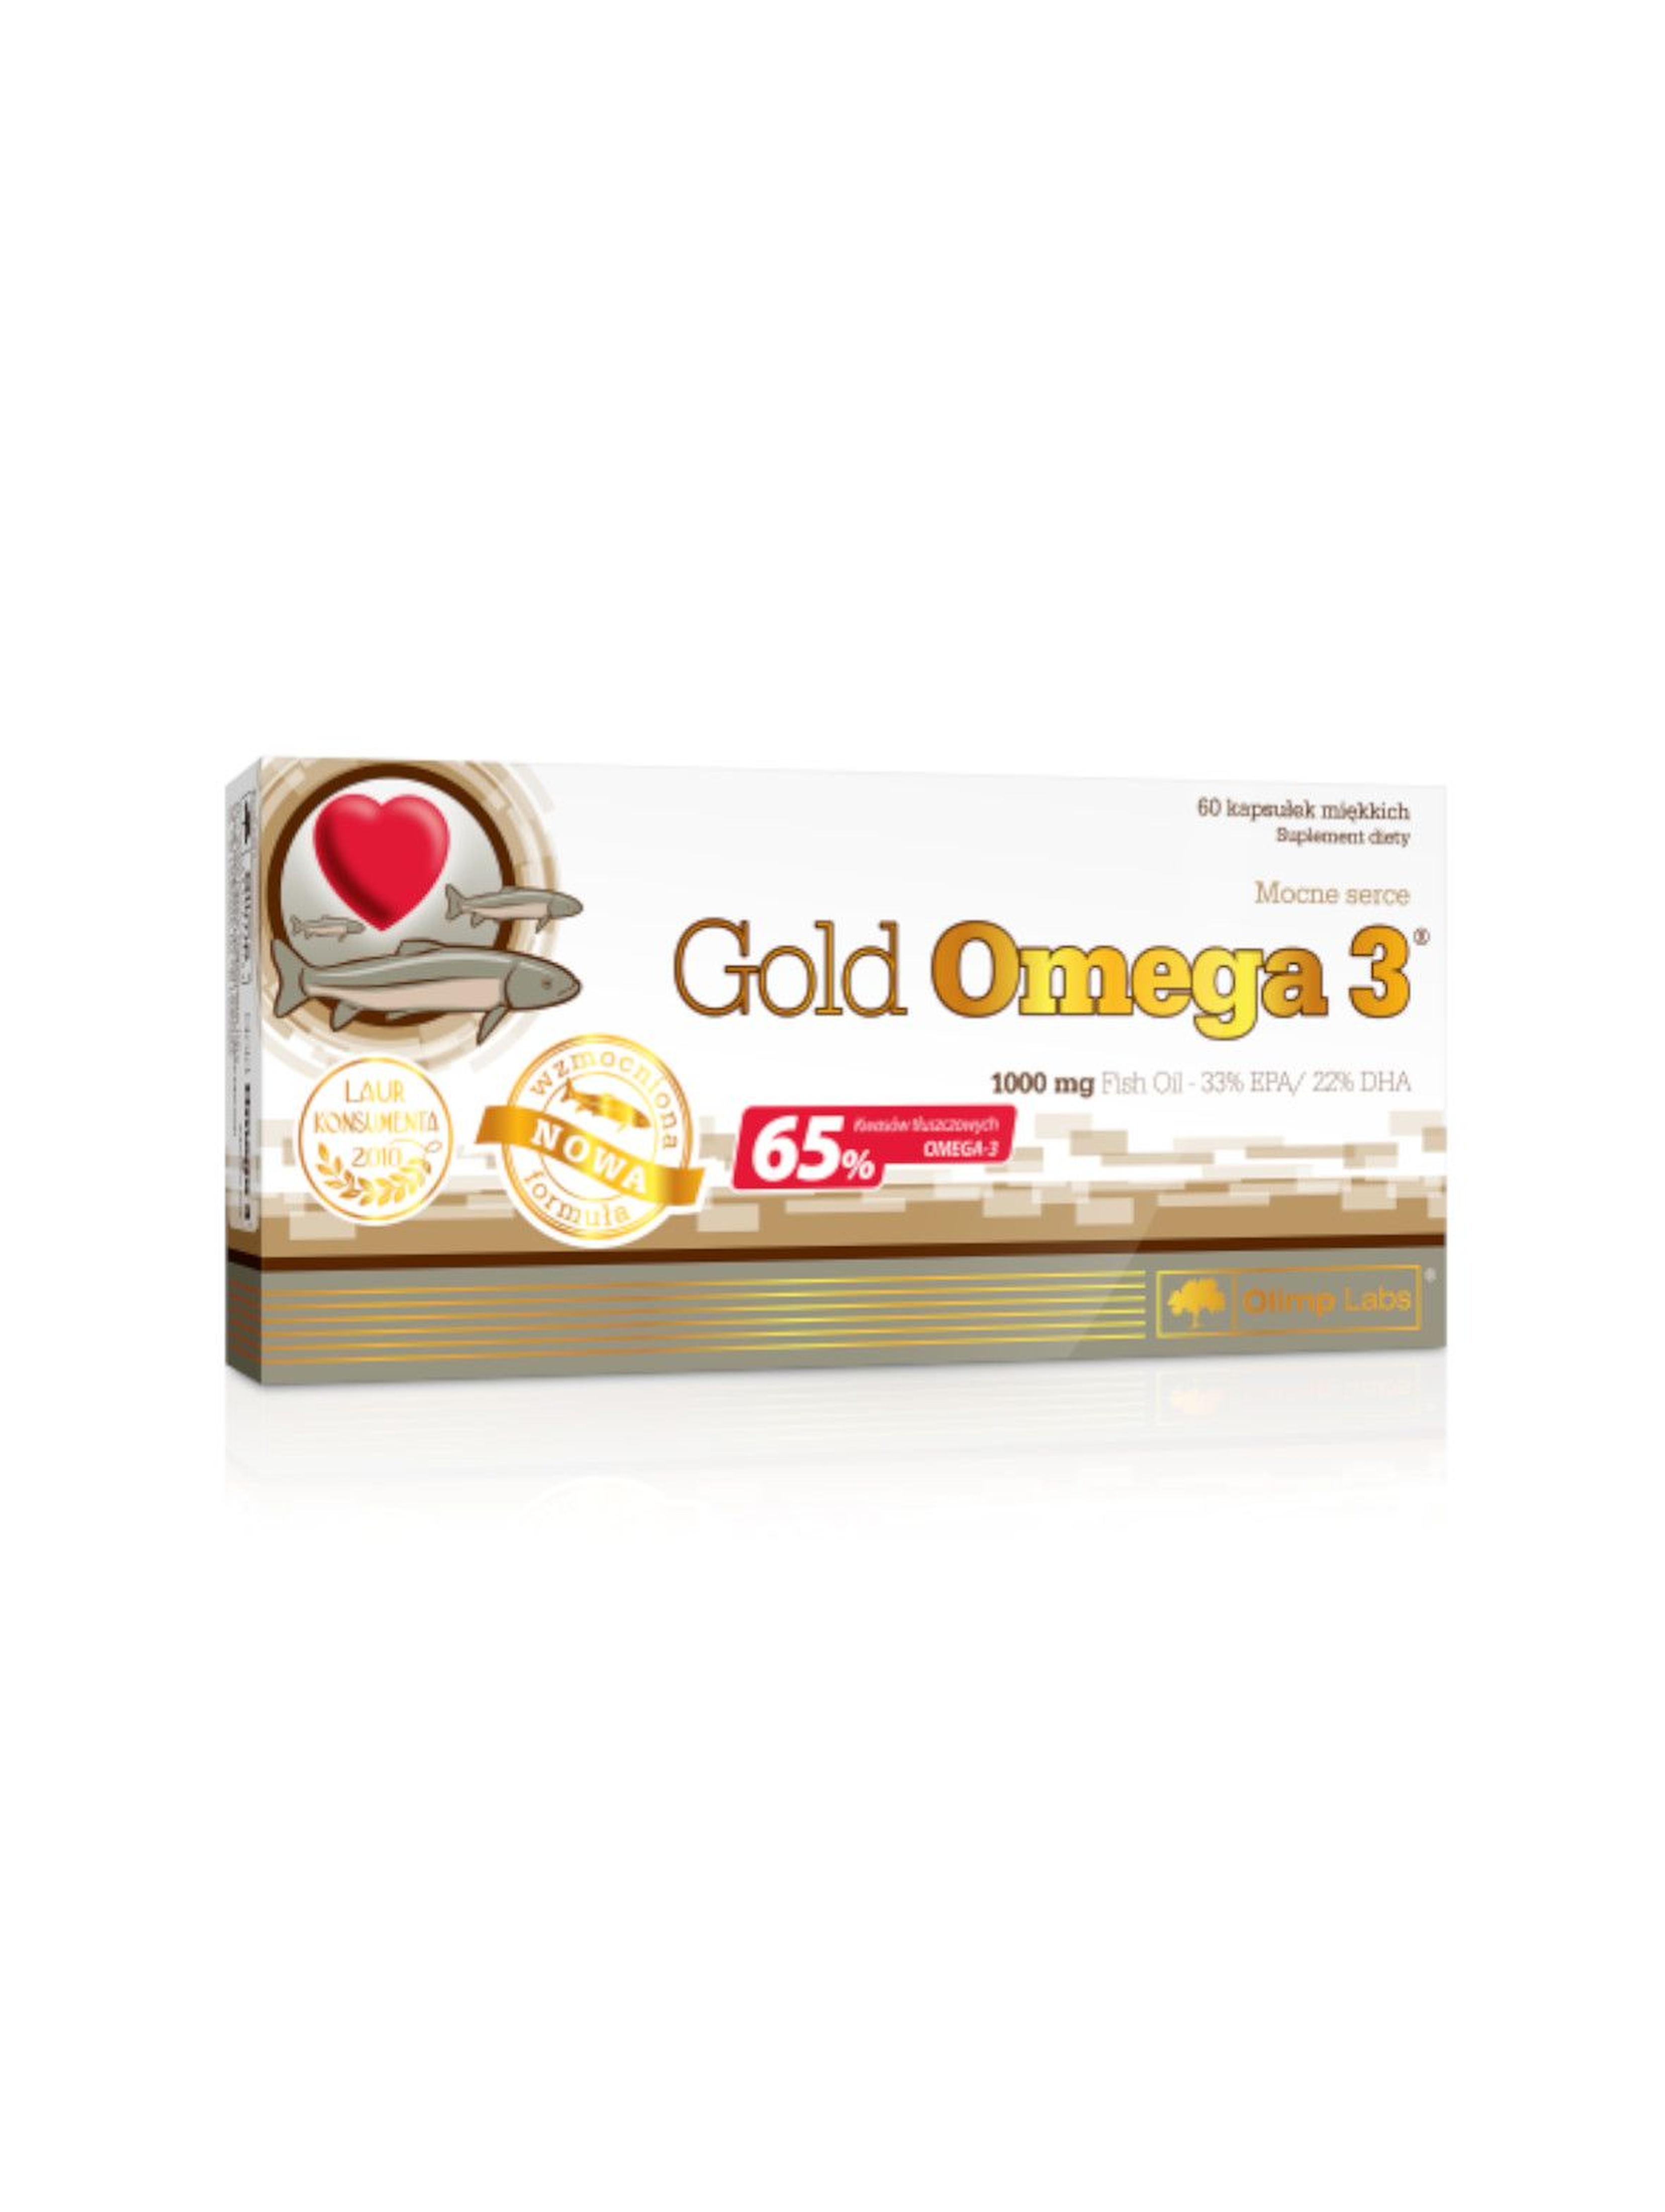 Gold Omega 3 60 kapsułek (65%)/1000 mg  TOP